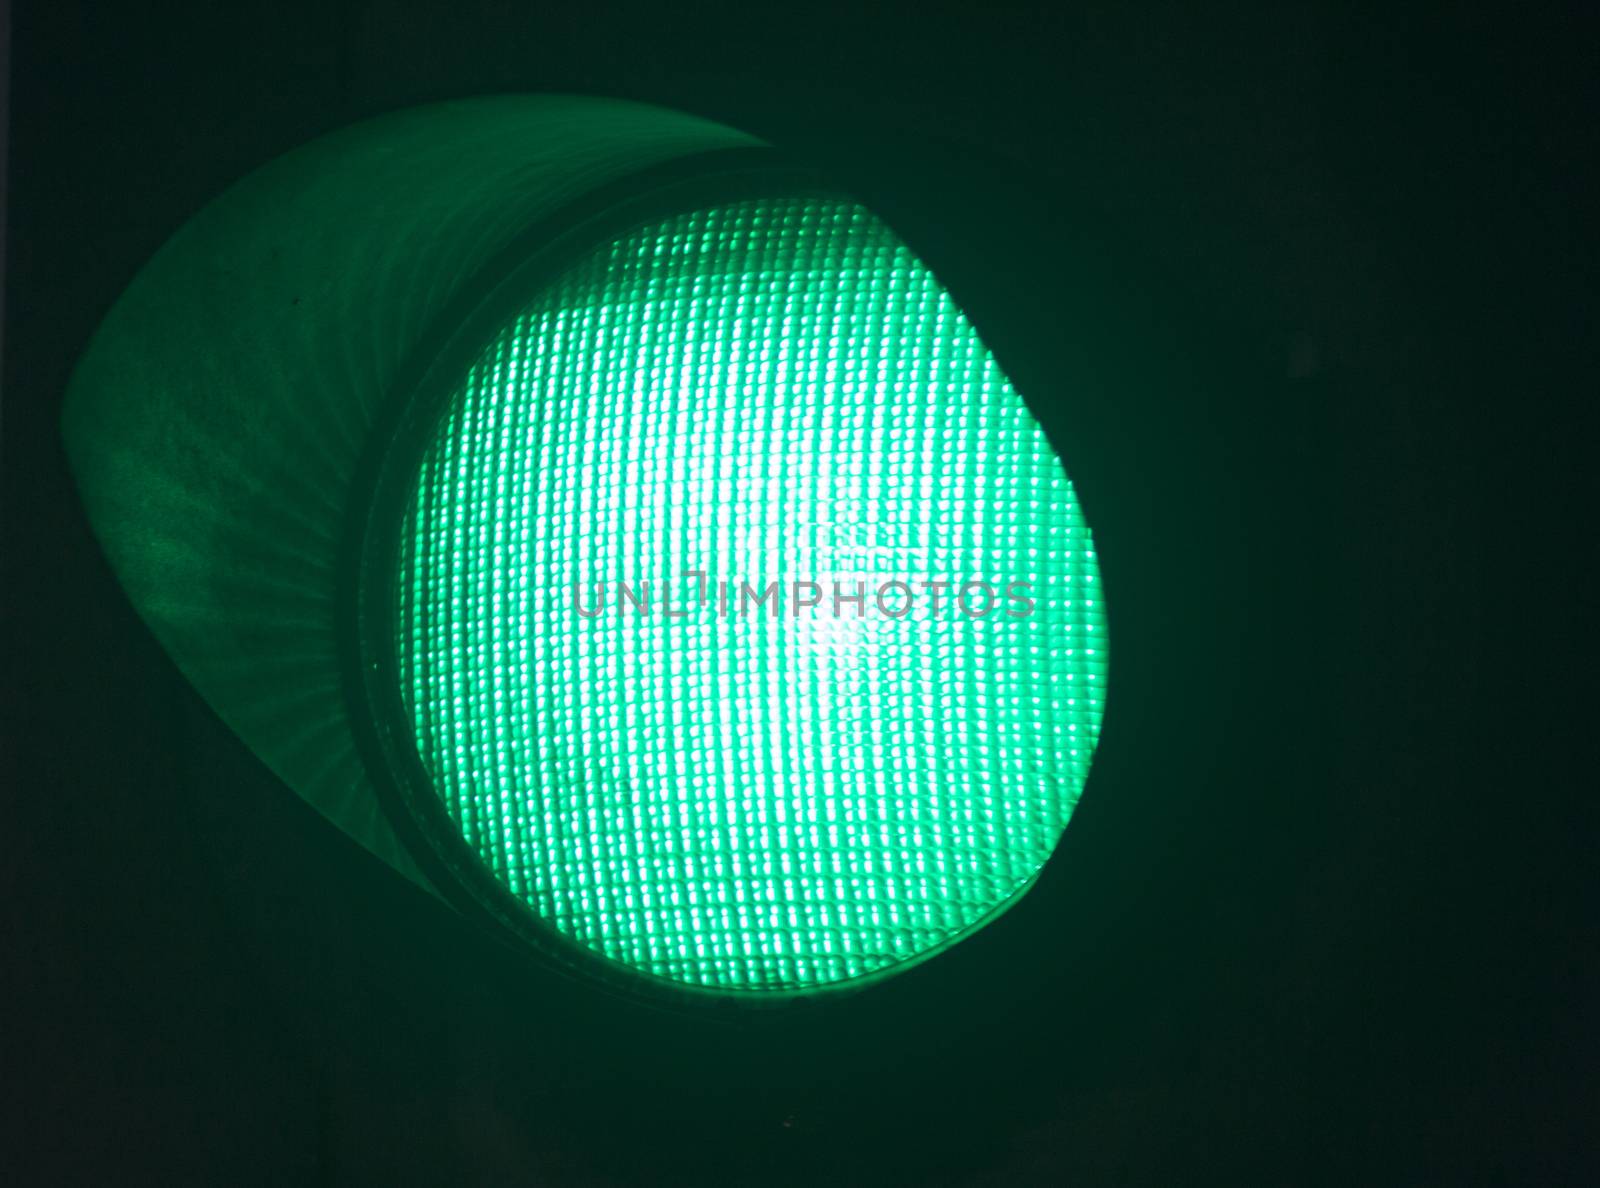 Traffic green go light  by edwardolive